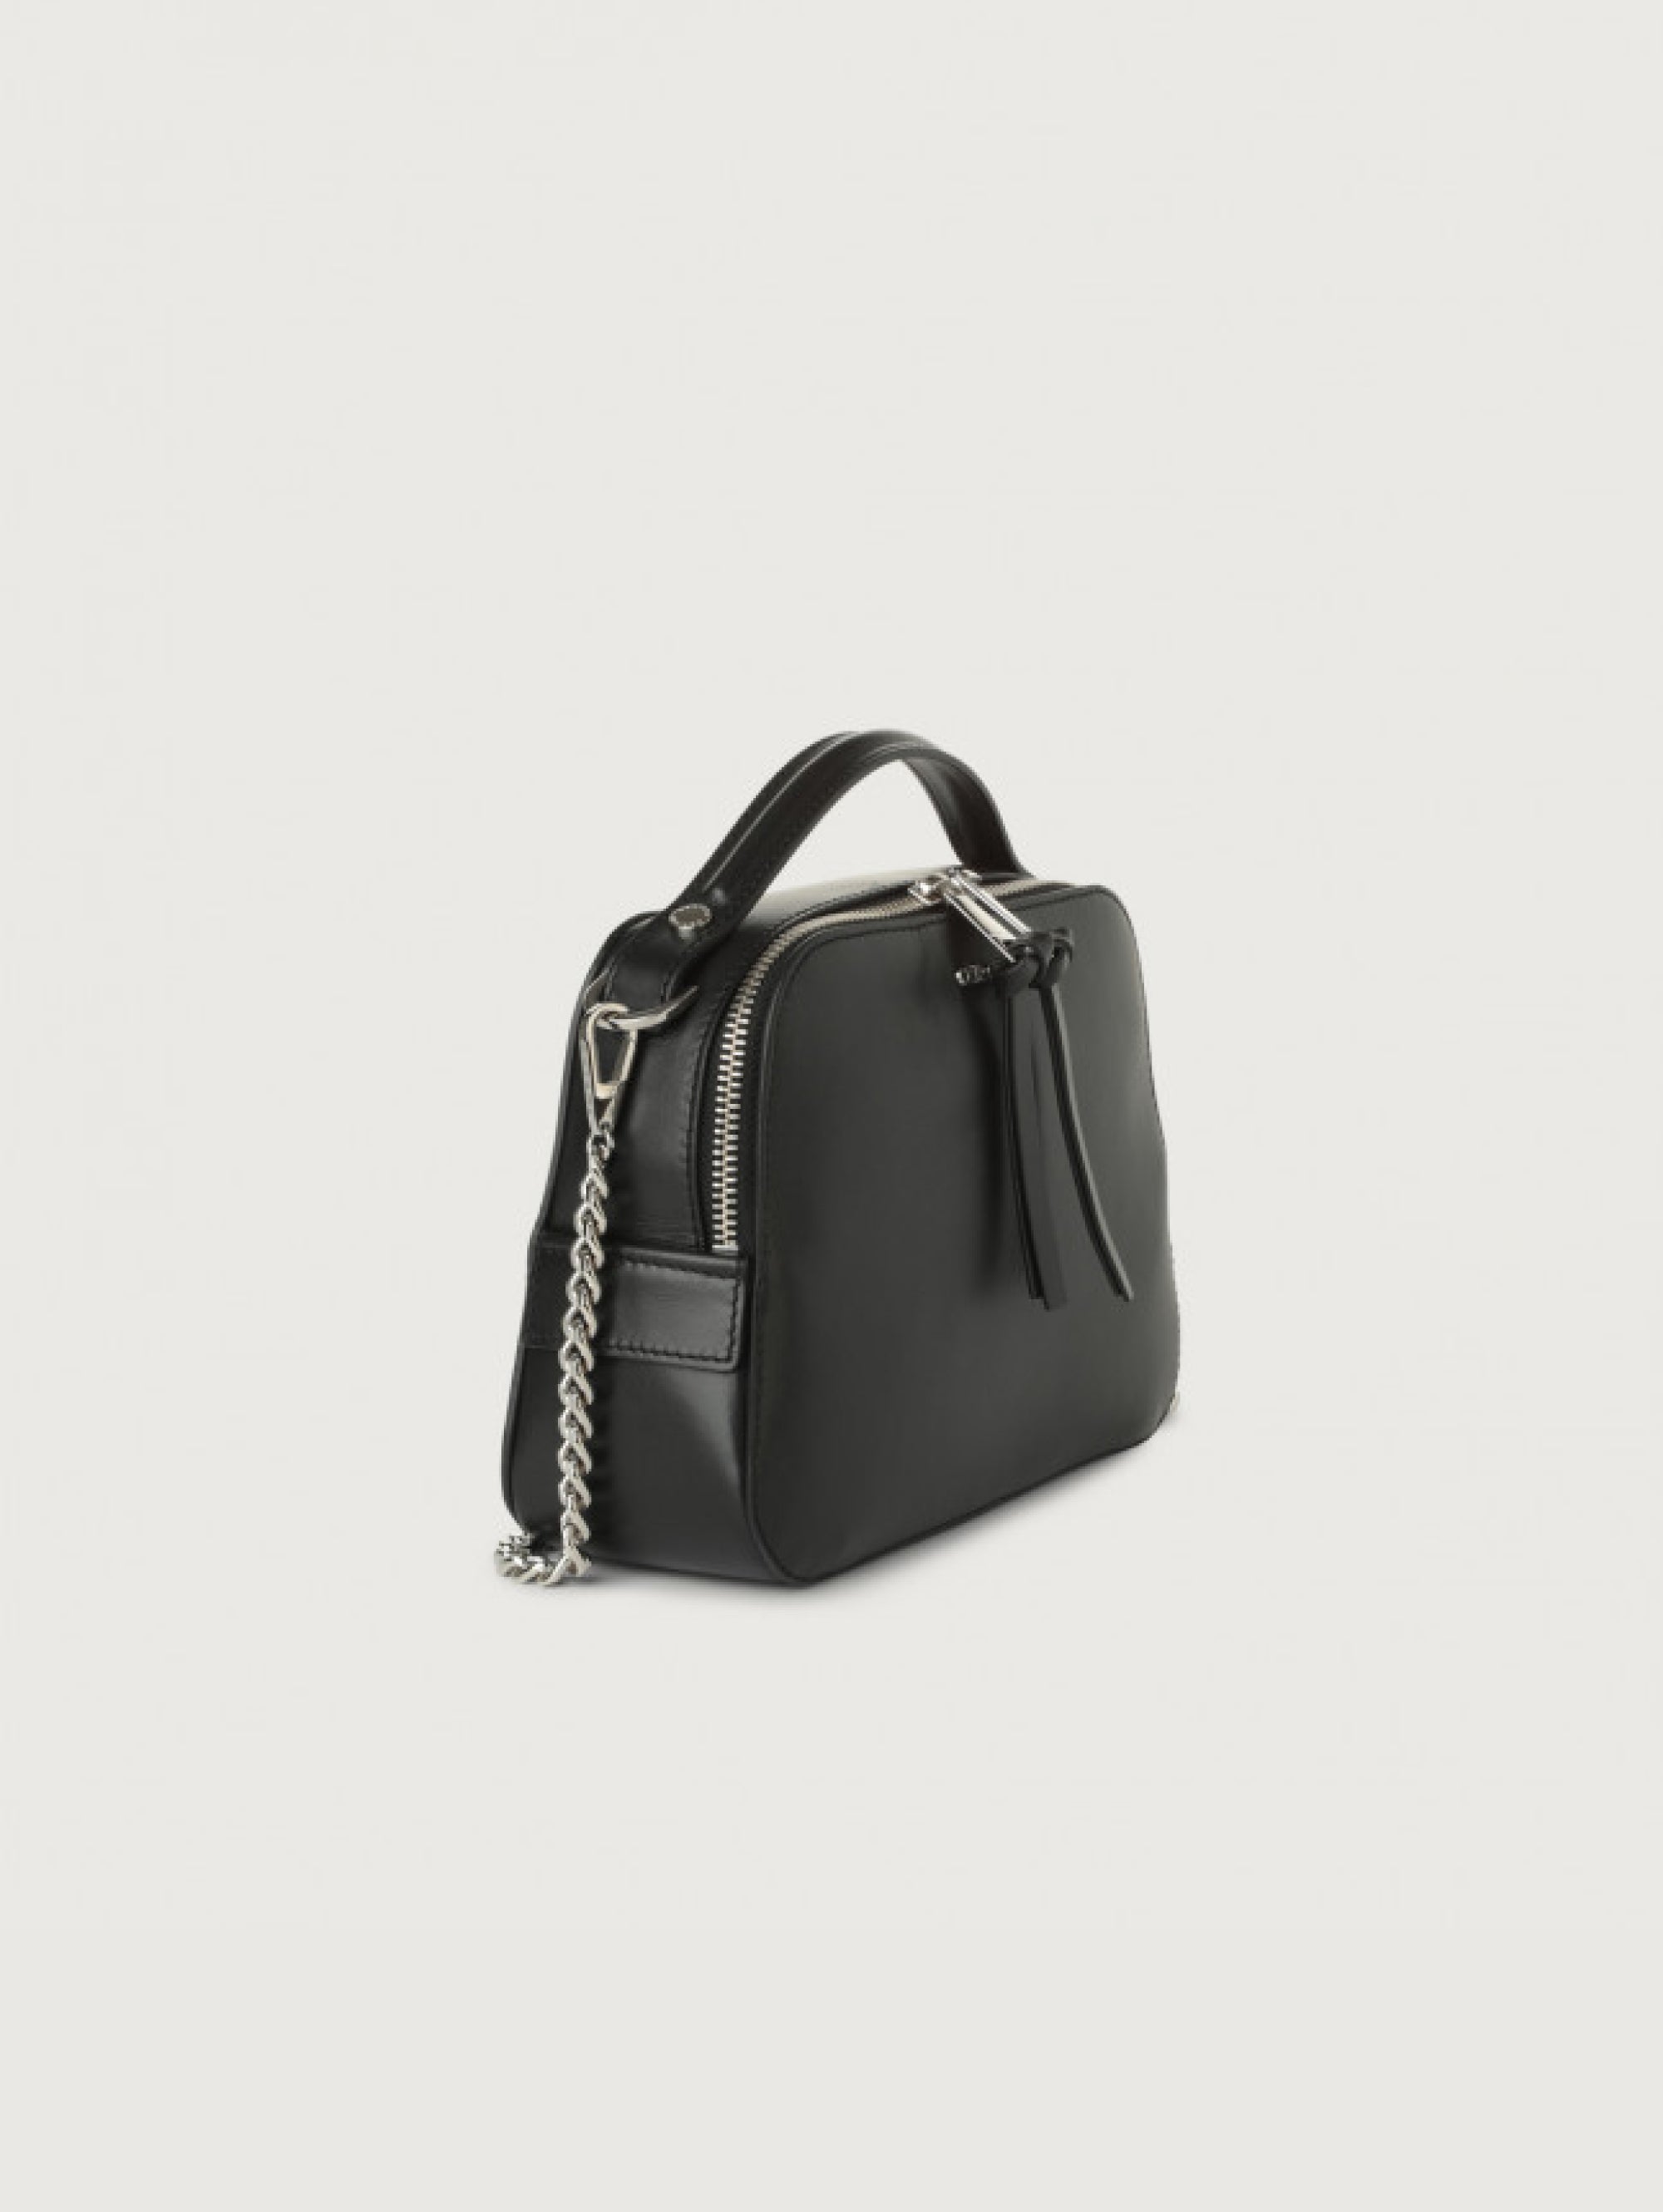 Chéri Handbag in Black Smooth Leather